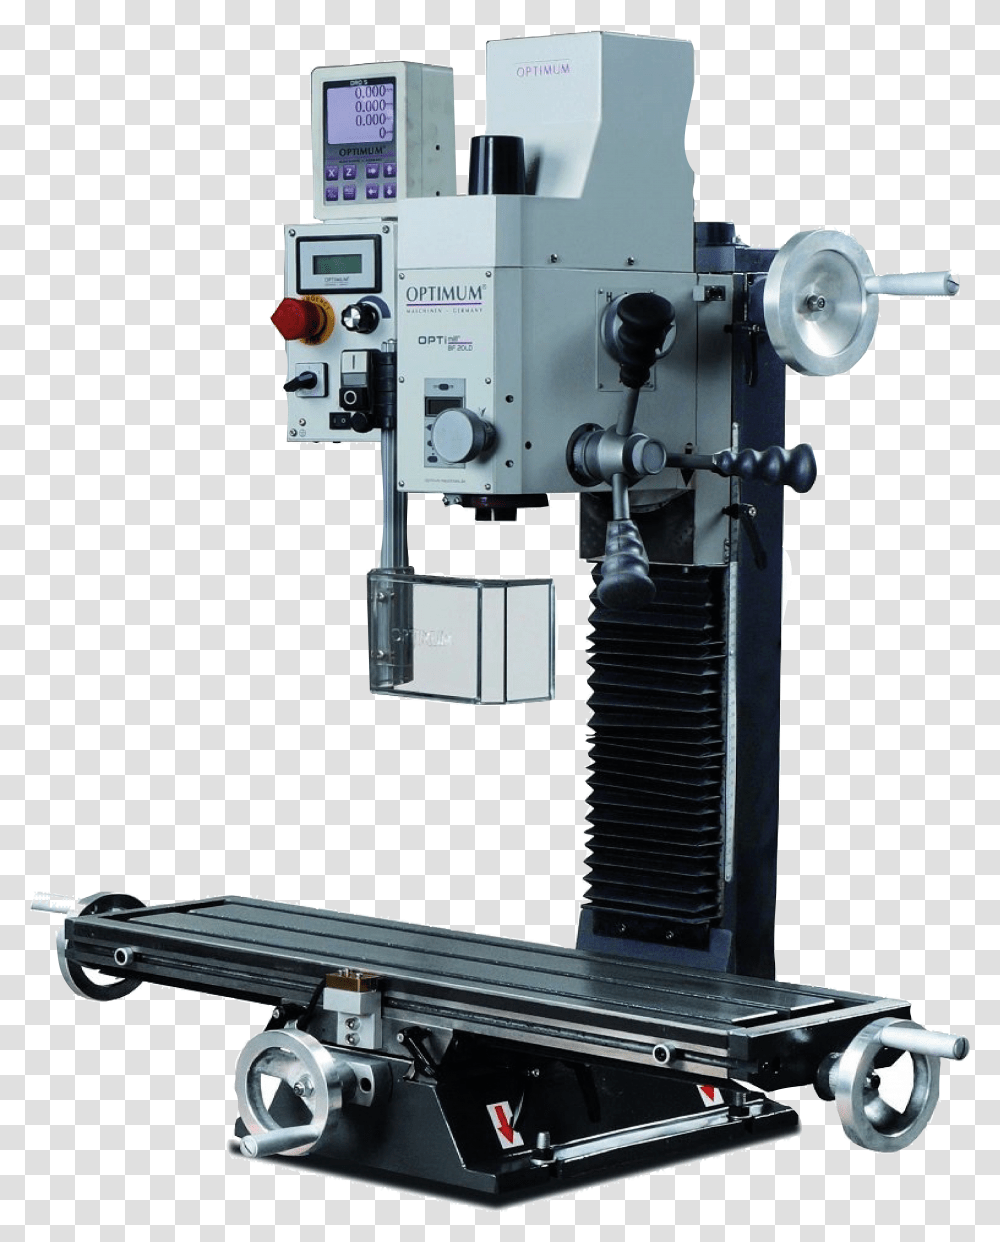 Optimum, Machine, Gas Pump, Lathe, Microscope Transparent Png